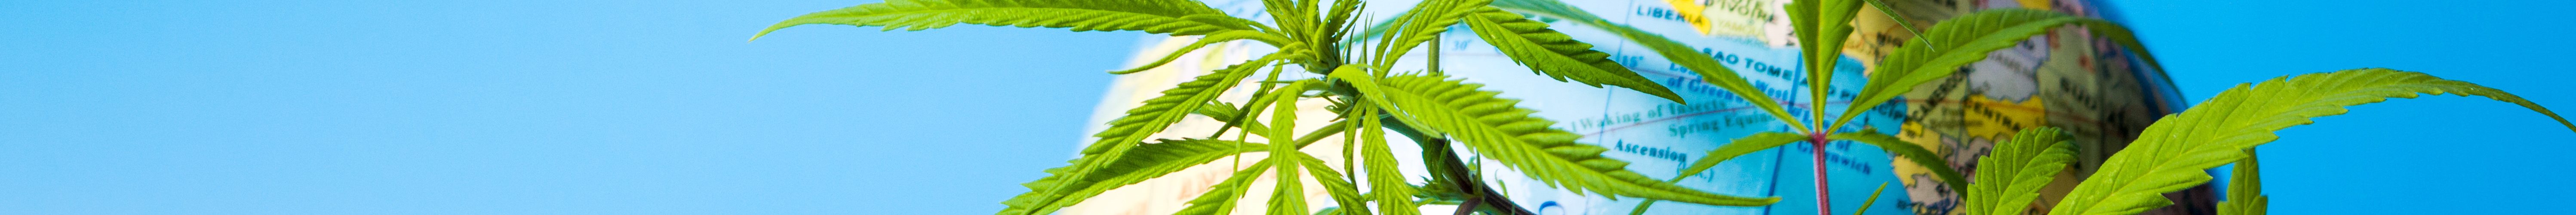 Uruguay cannabis tourism industry